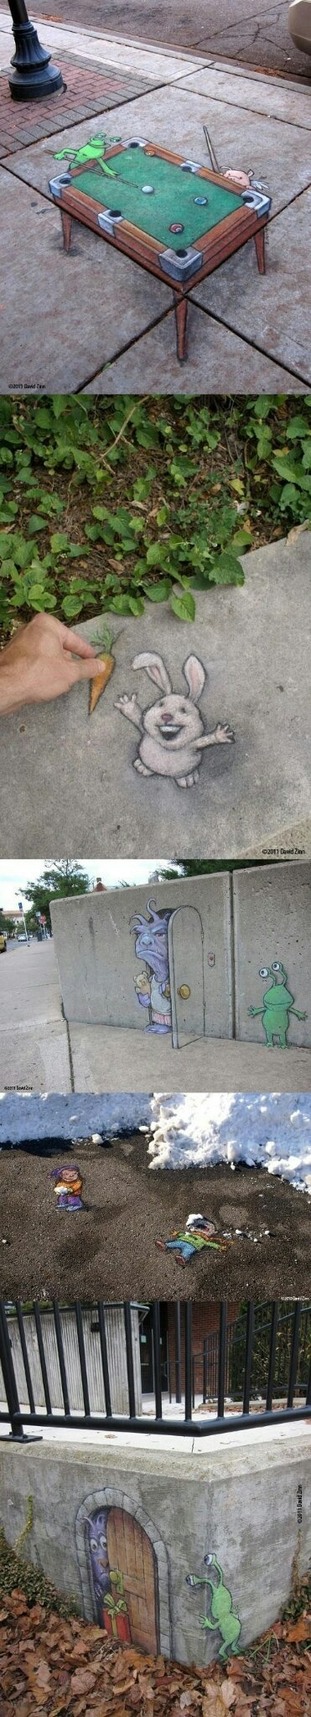 Perspective street art - meme